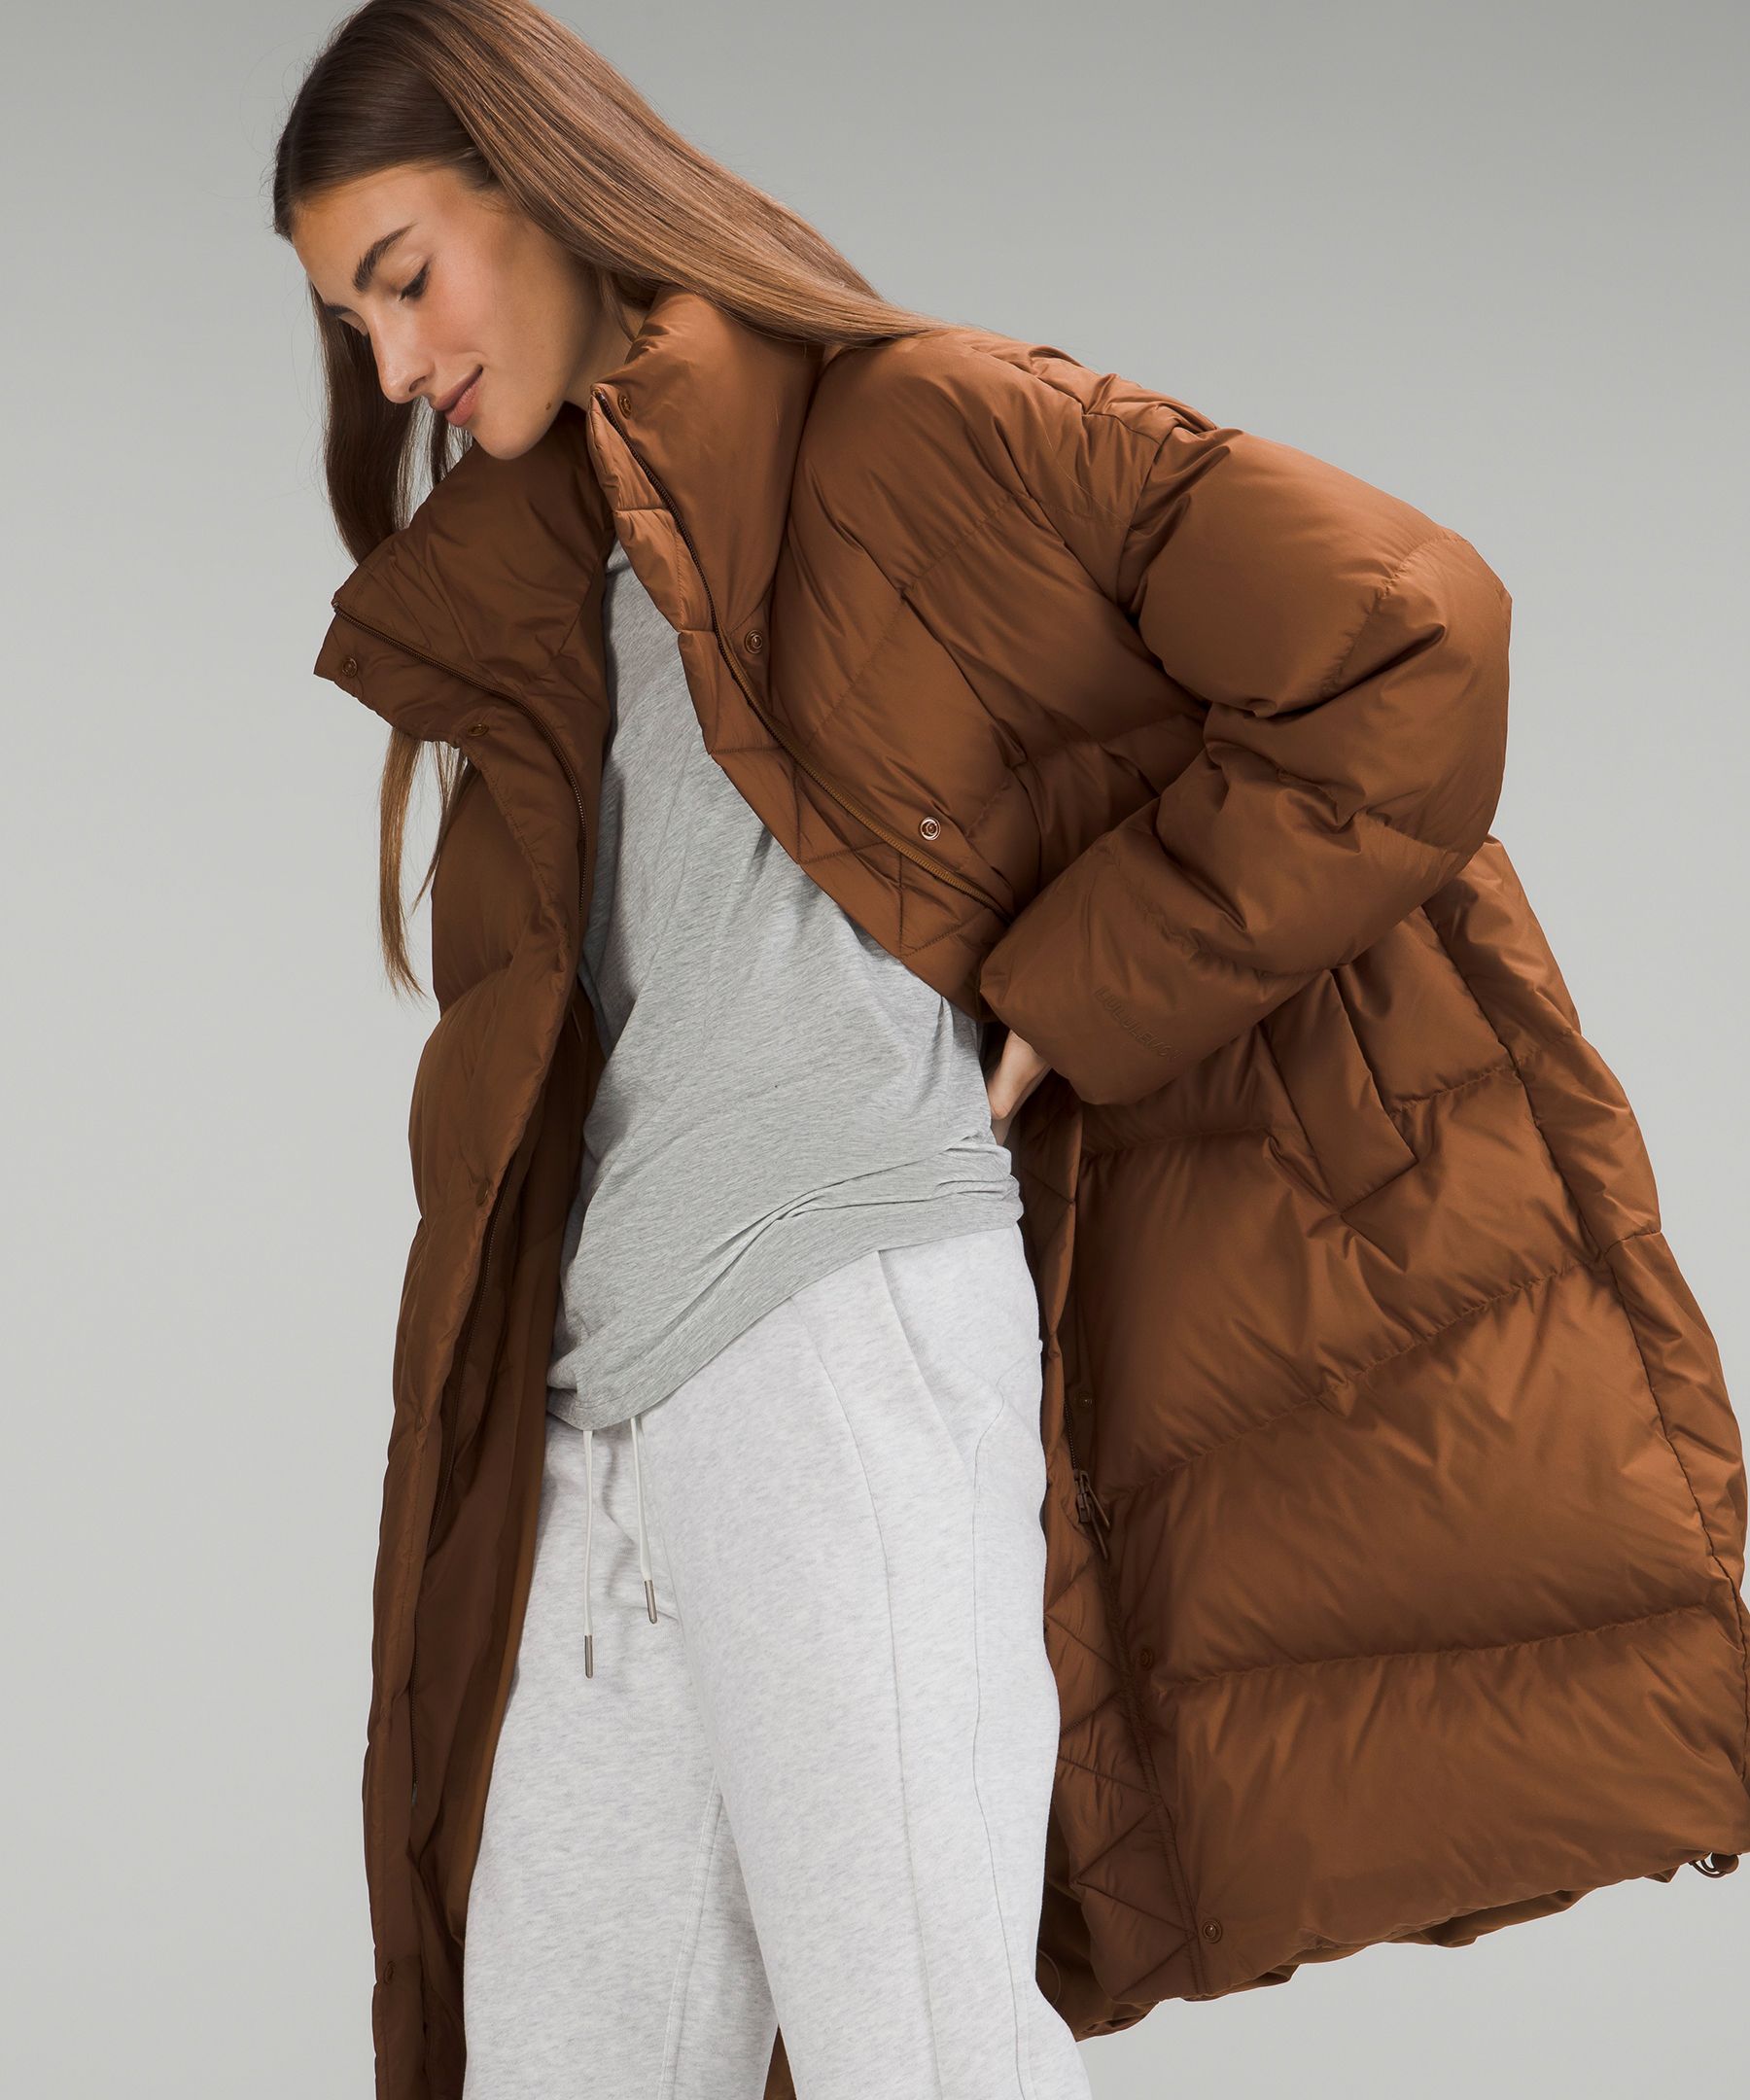 H&M Oversized Padded Quilted Vest Sleeveless Jacket Runs Big Measurements